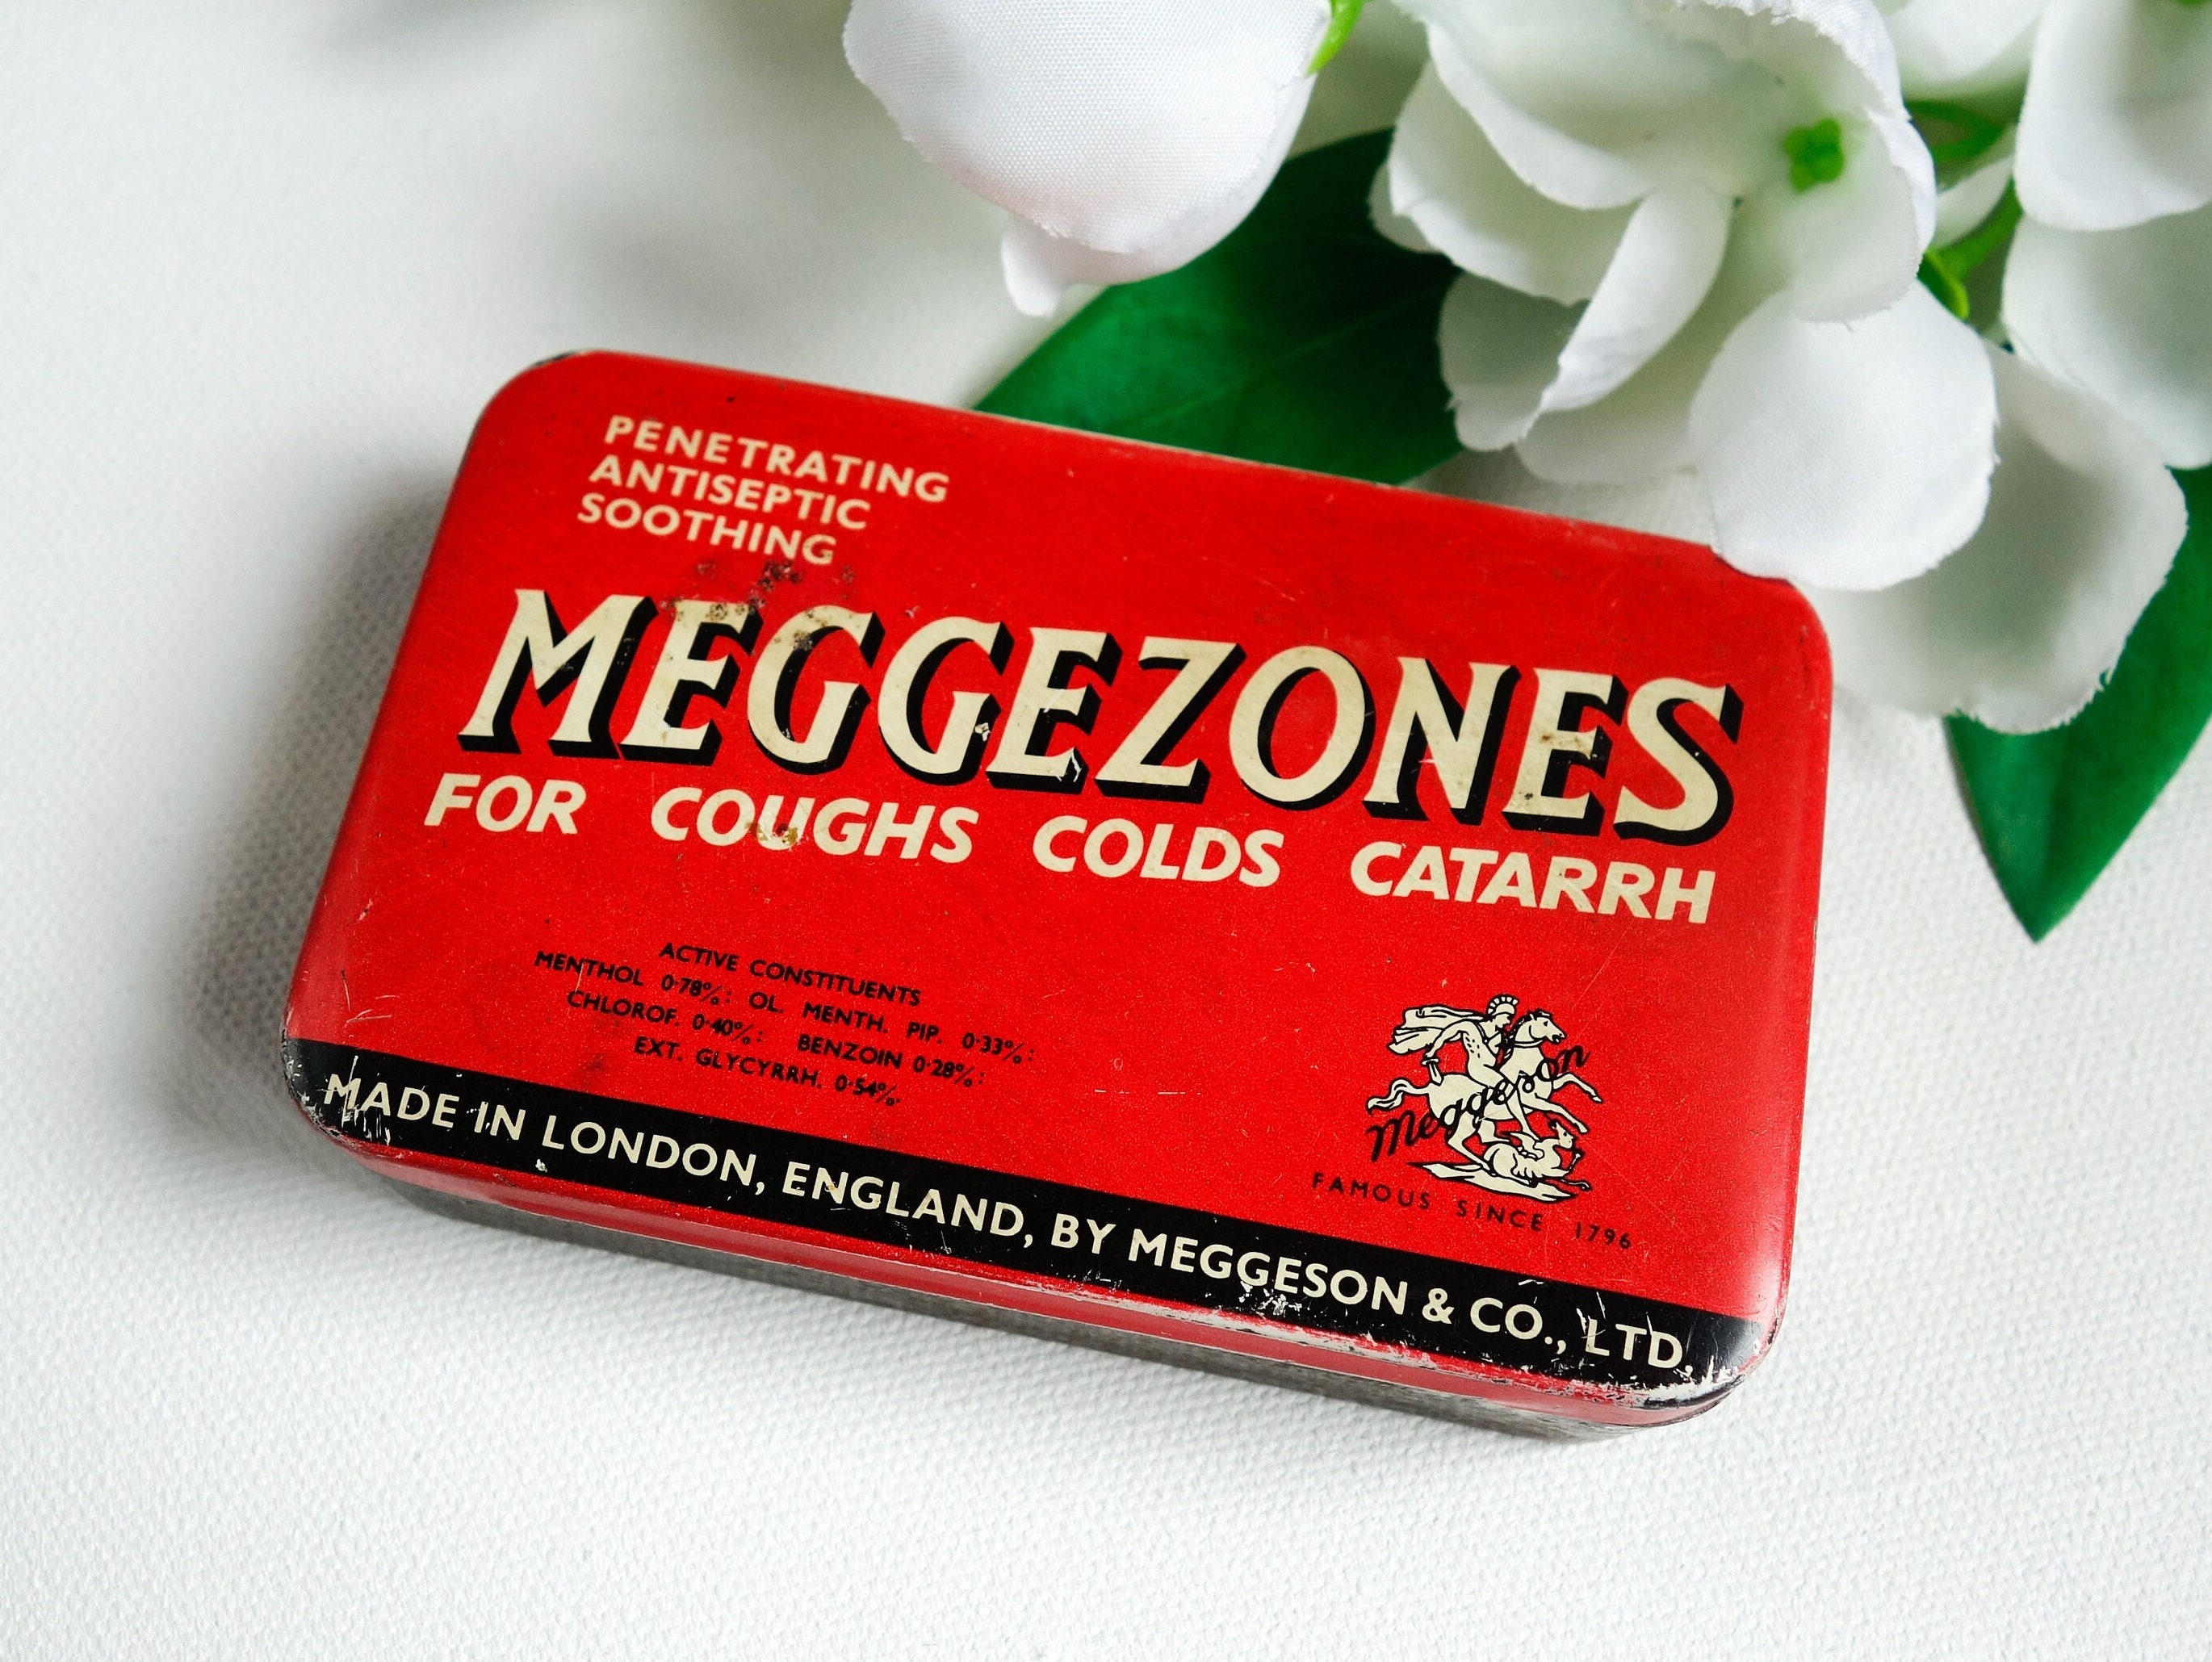 French Cough Candy Box ,vintage 1960, Pulmoll Box,collectible BOX 